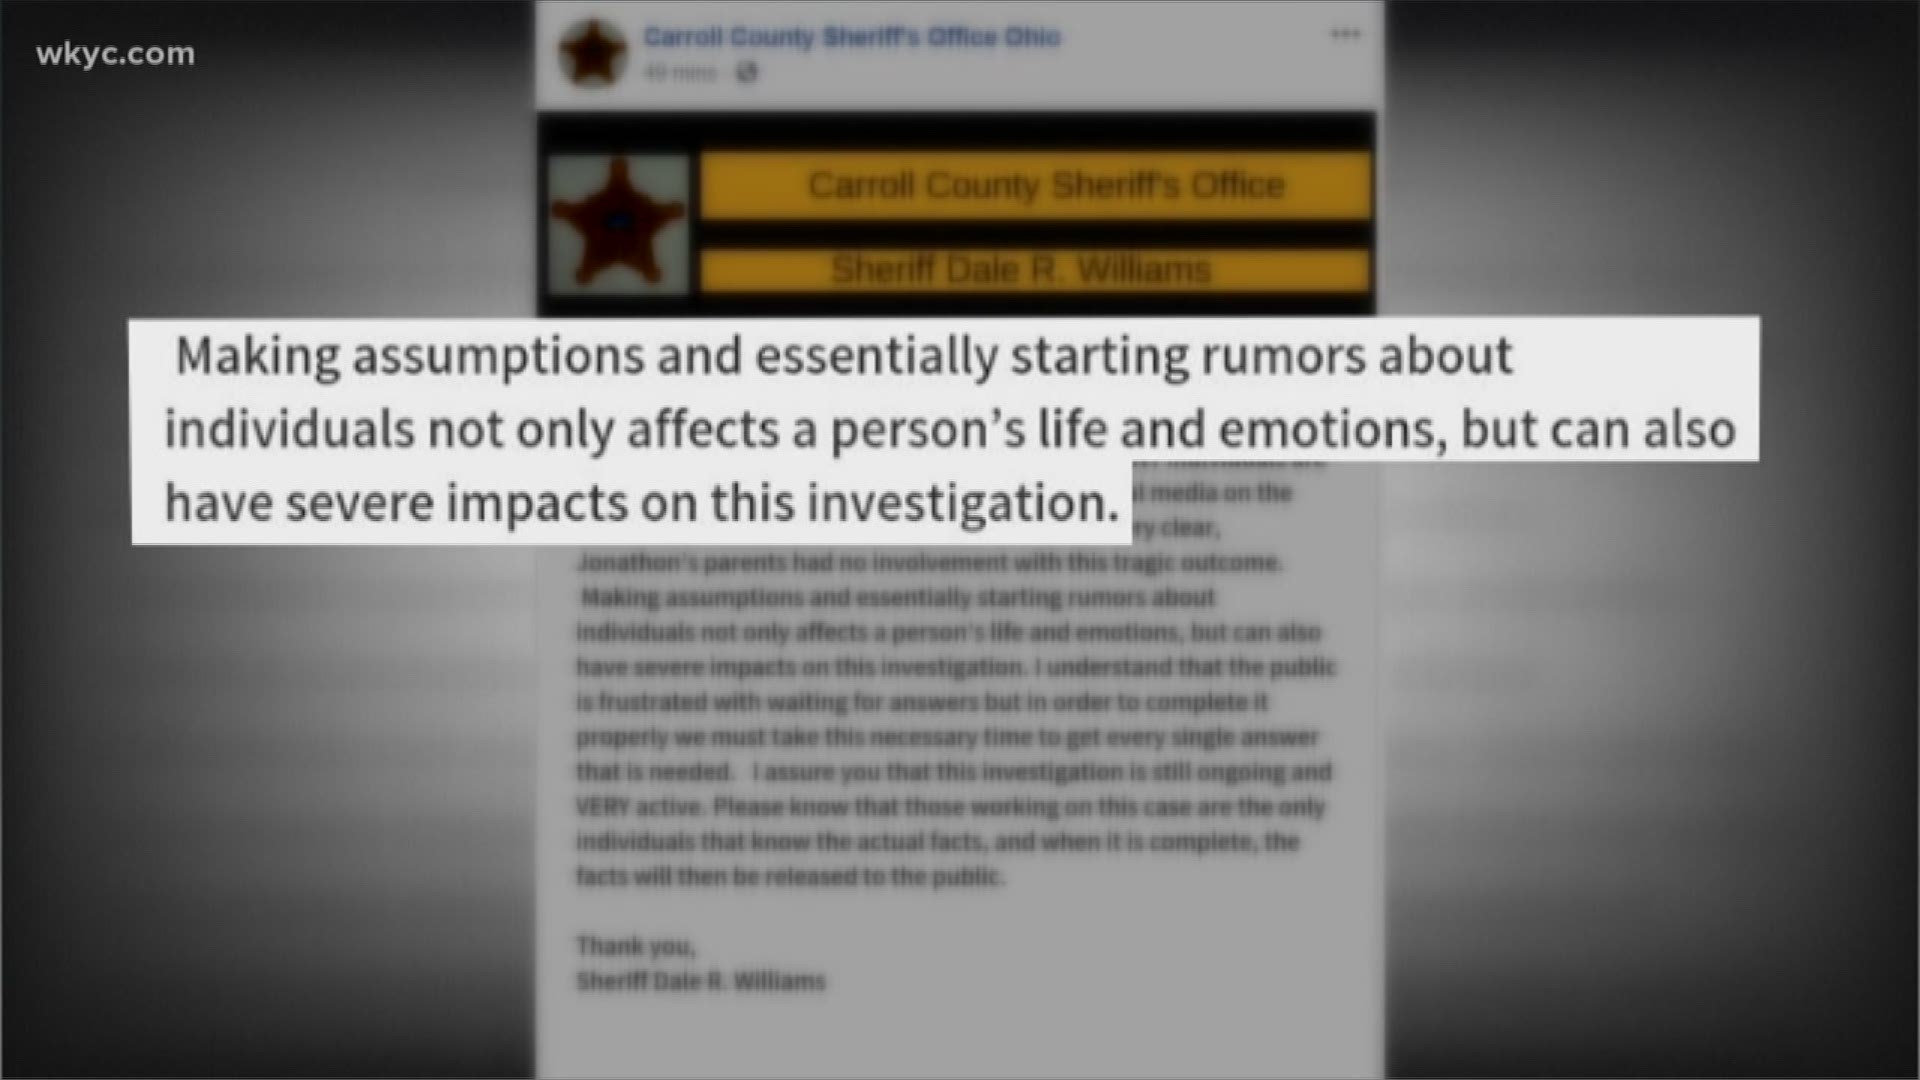 Carroll County Sheriff seeks to stop social media rumors surrounding death of teen